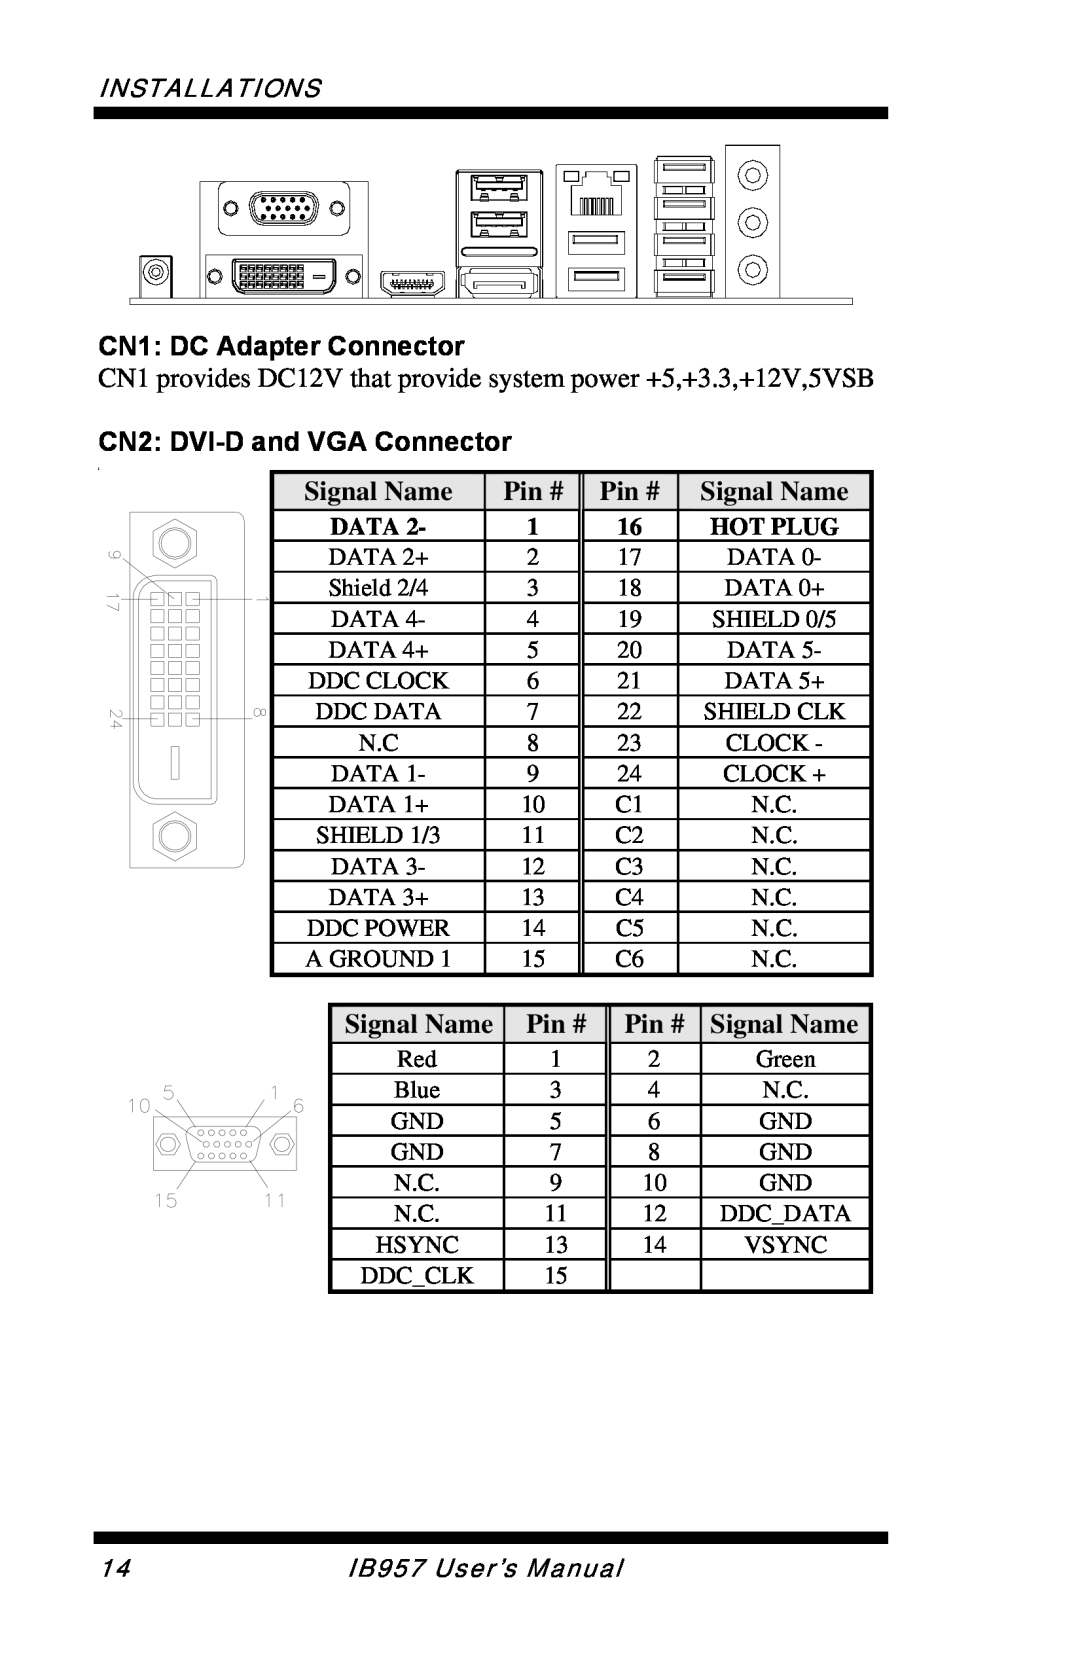 Intel IB957 CN1 DC Adapter Connector, CN2 DVI-D and VGA Connector, Signal Name, Pin #, Installations, Data, Hot Plug 